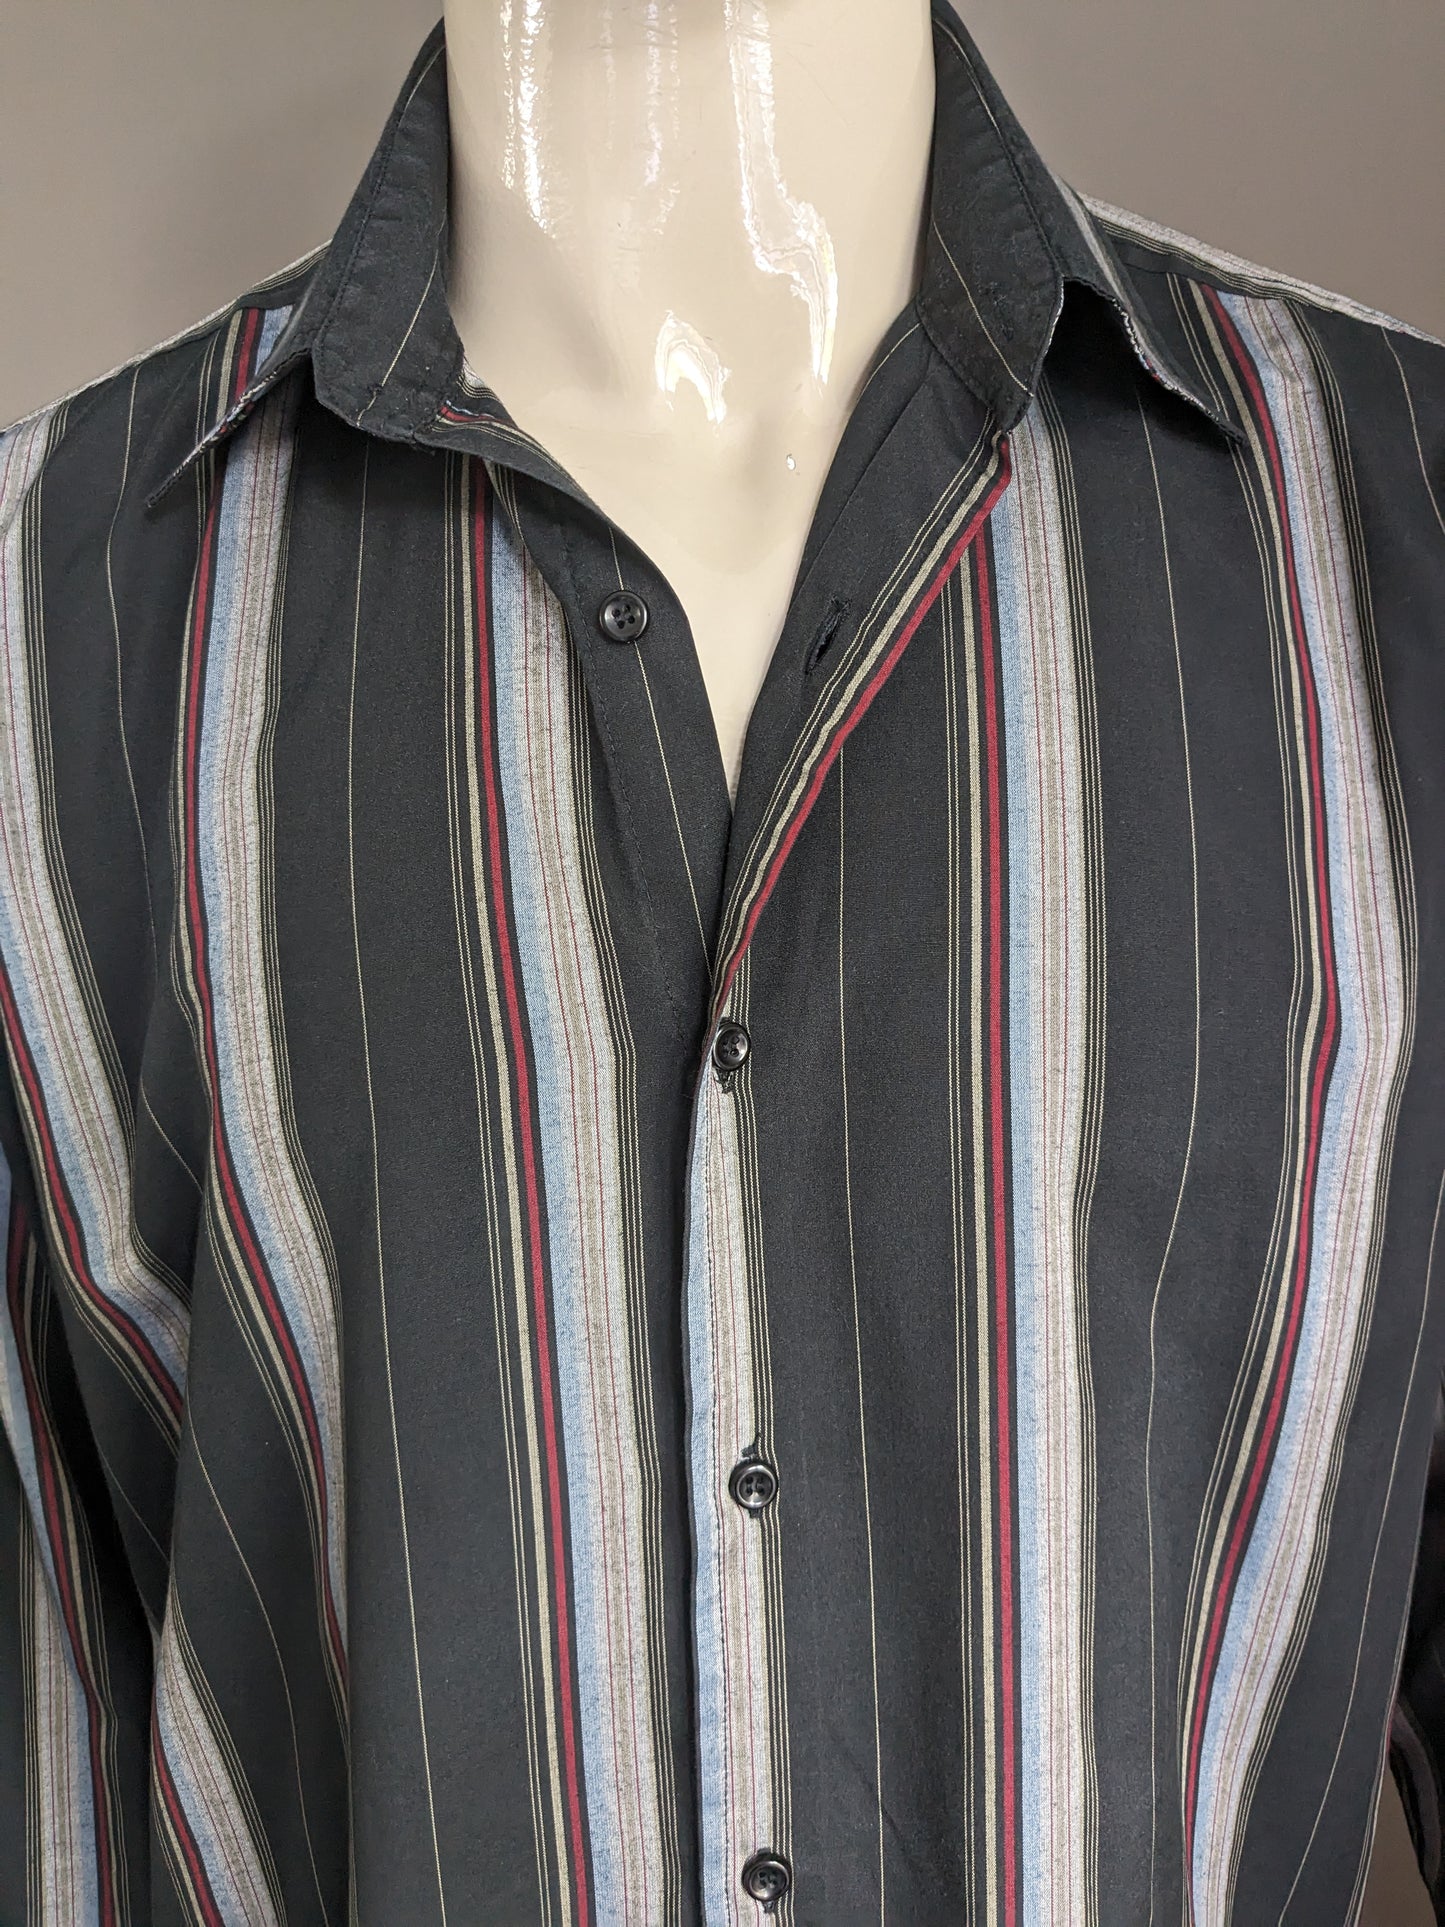 Vintage NPO No Problems Shirt. Black red blue gray striped. Size 2XL / XXL.